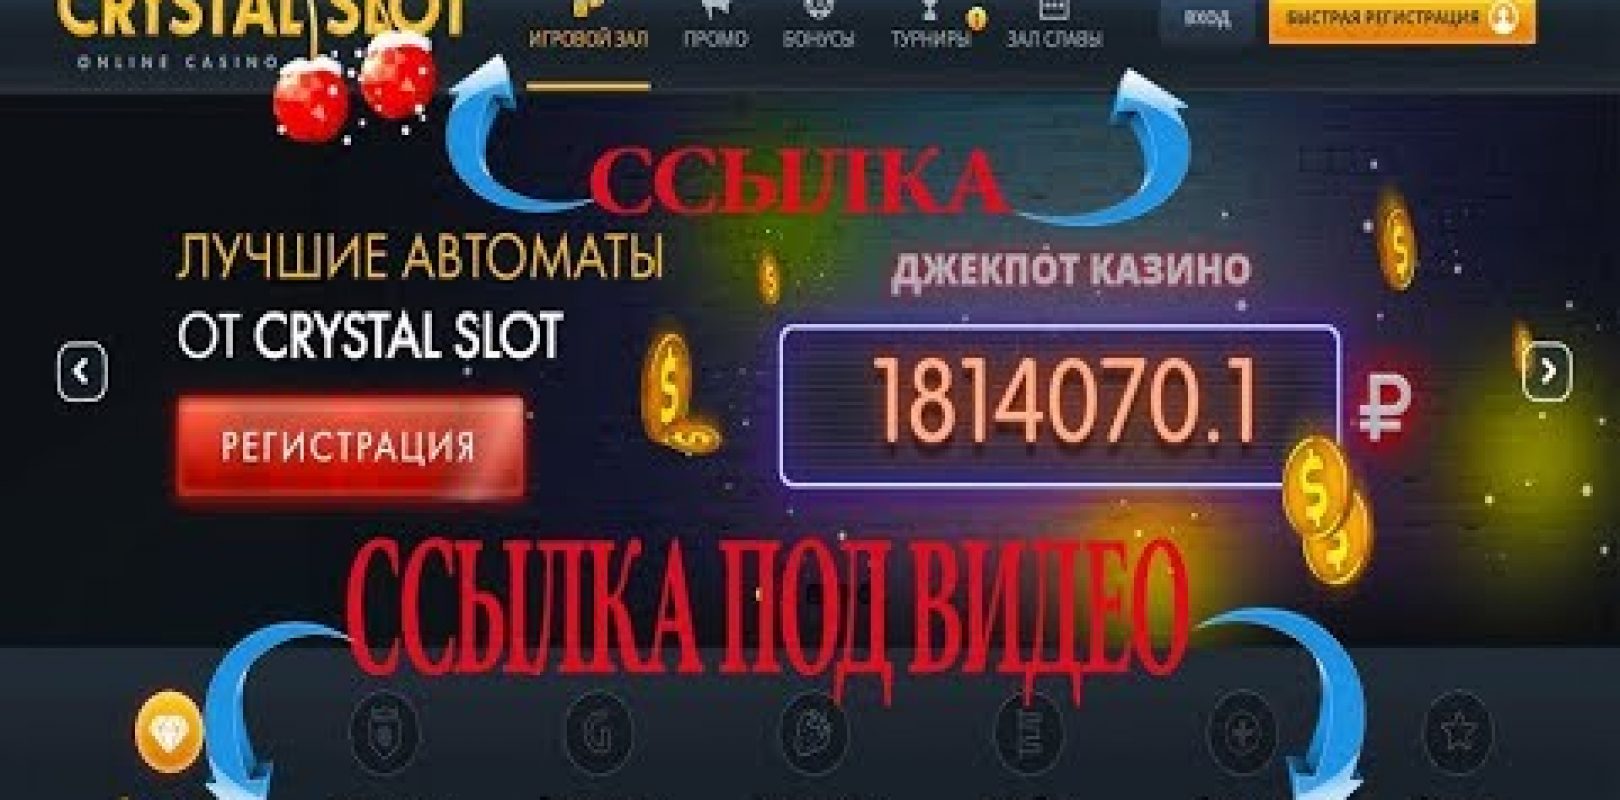 Slot royal casino